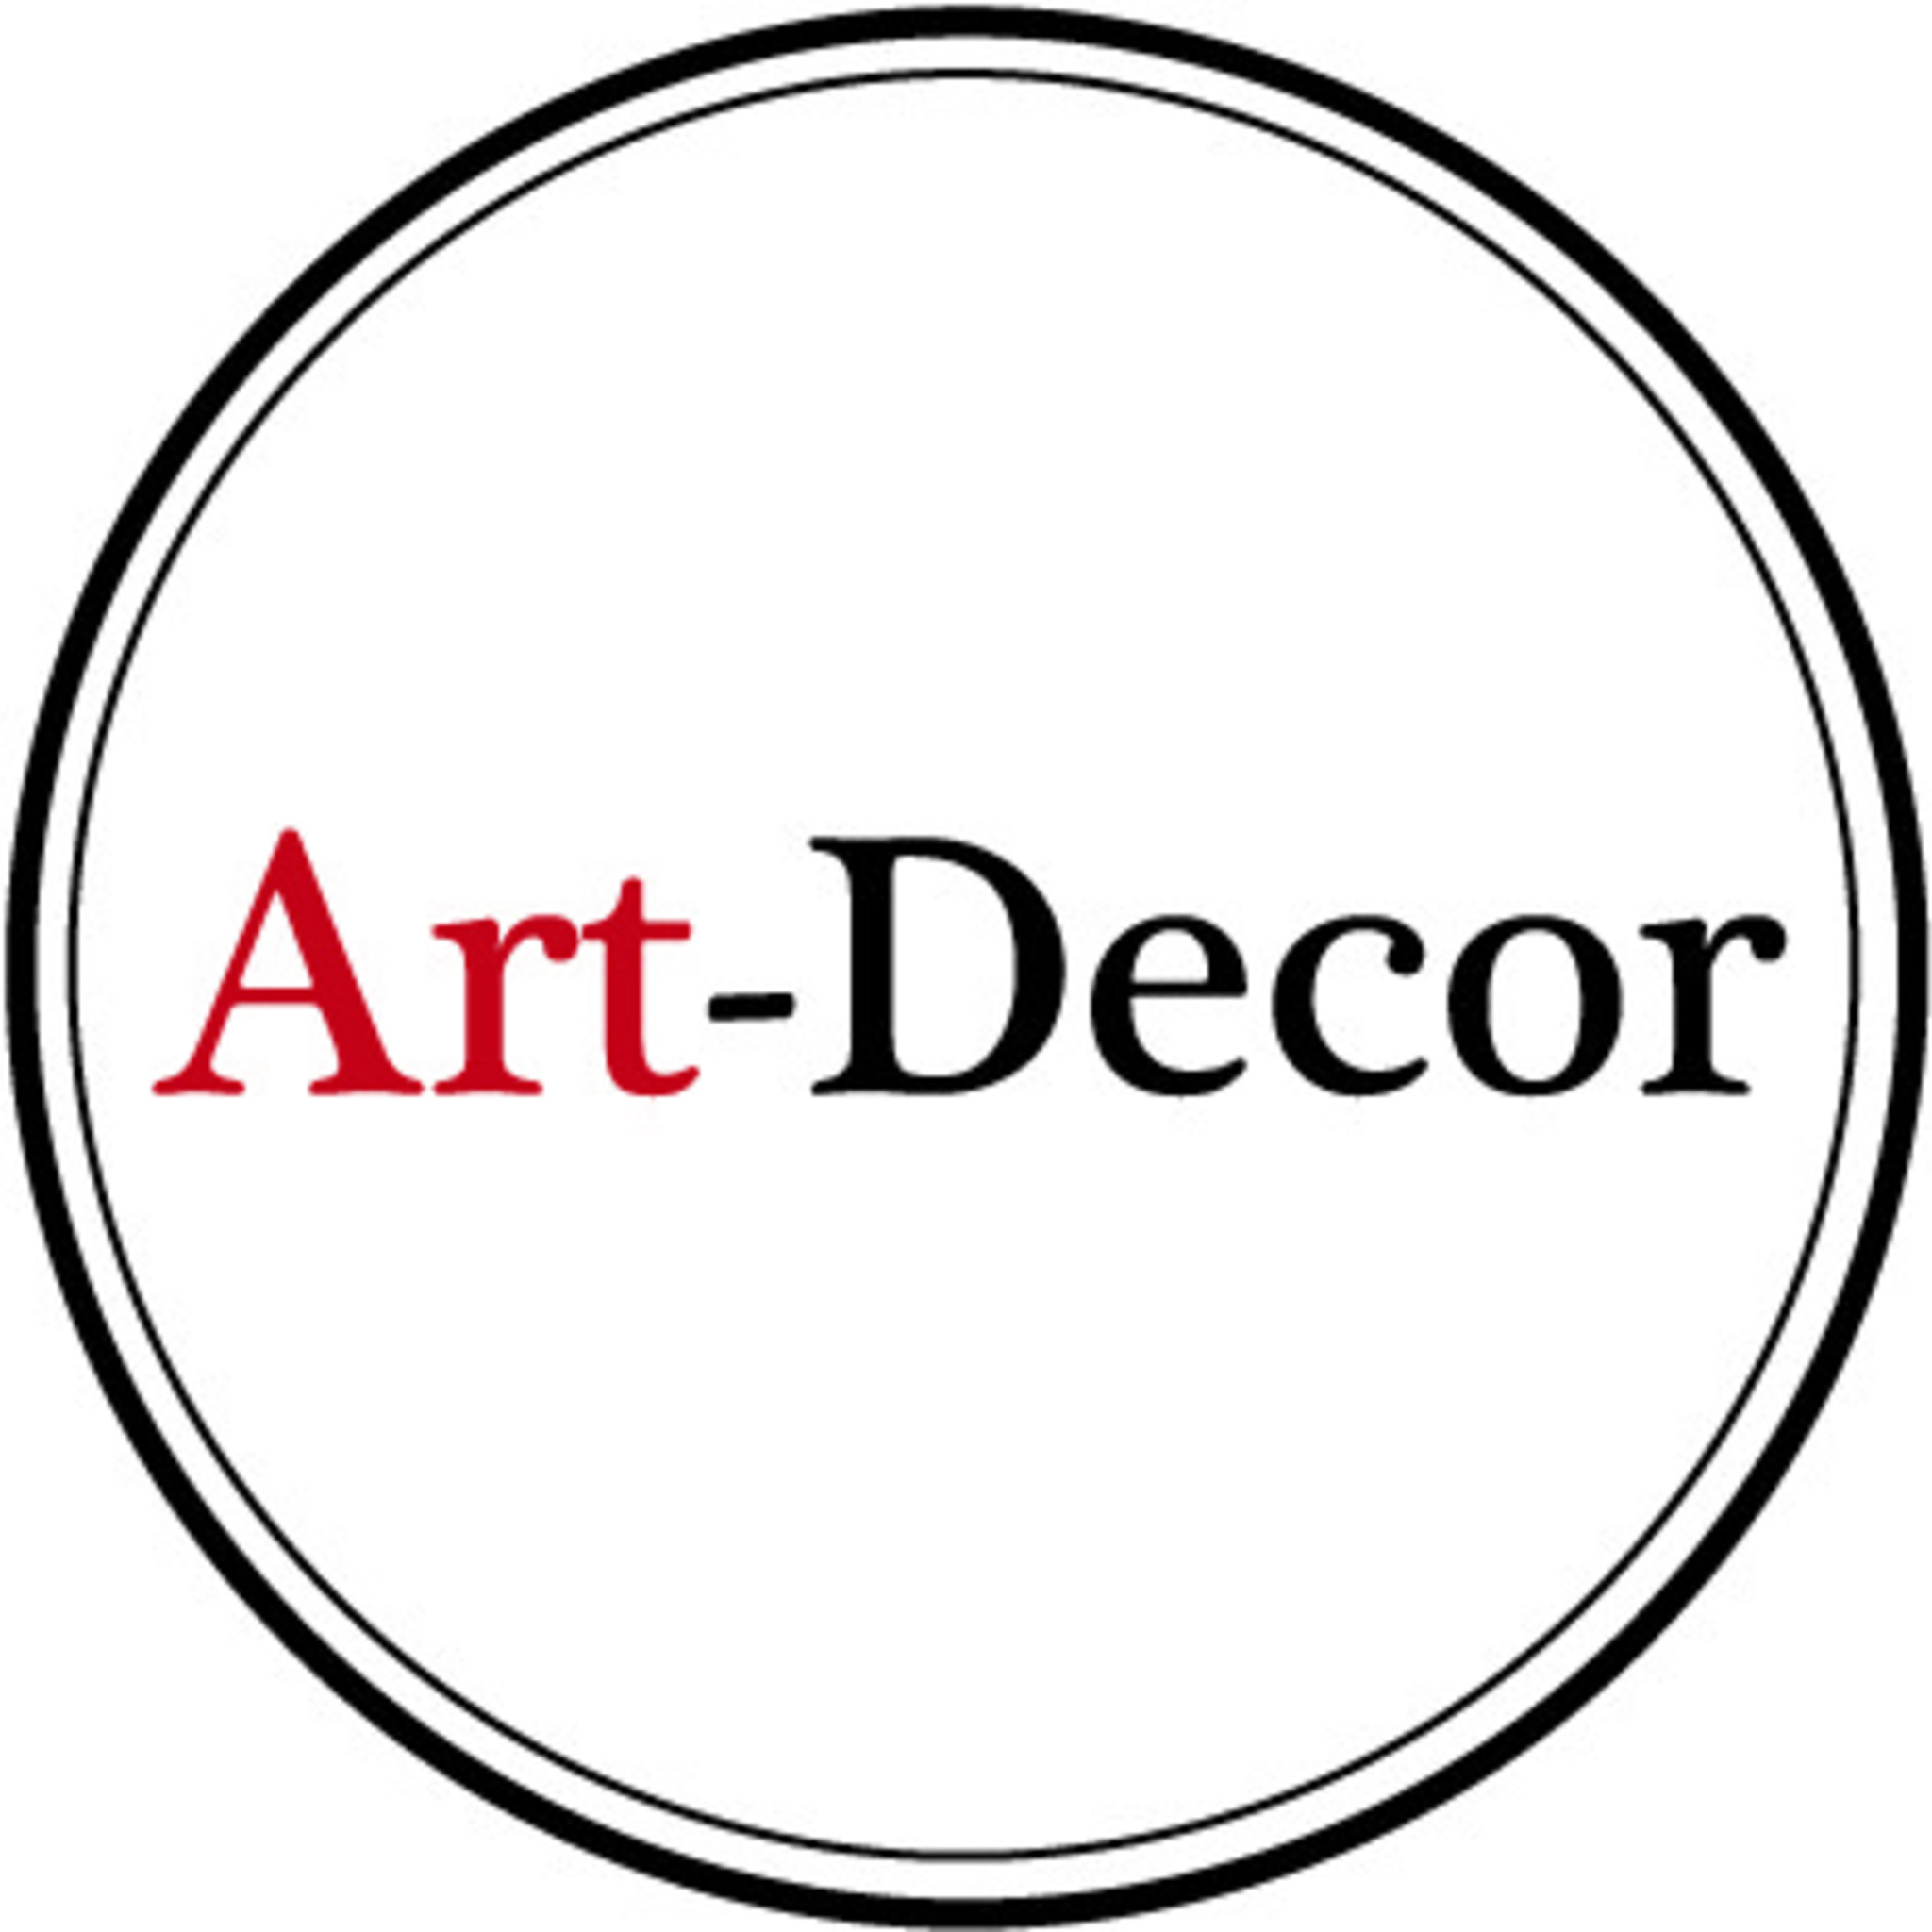 An exhibition of contemporary art and design Art-Decor